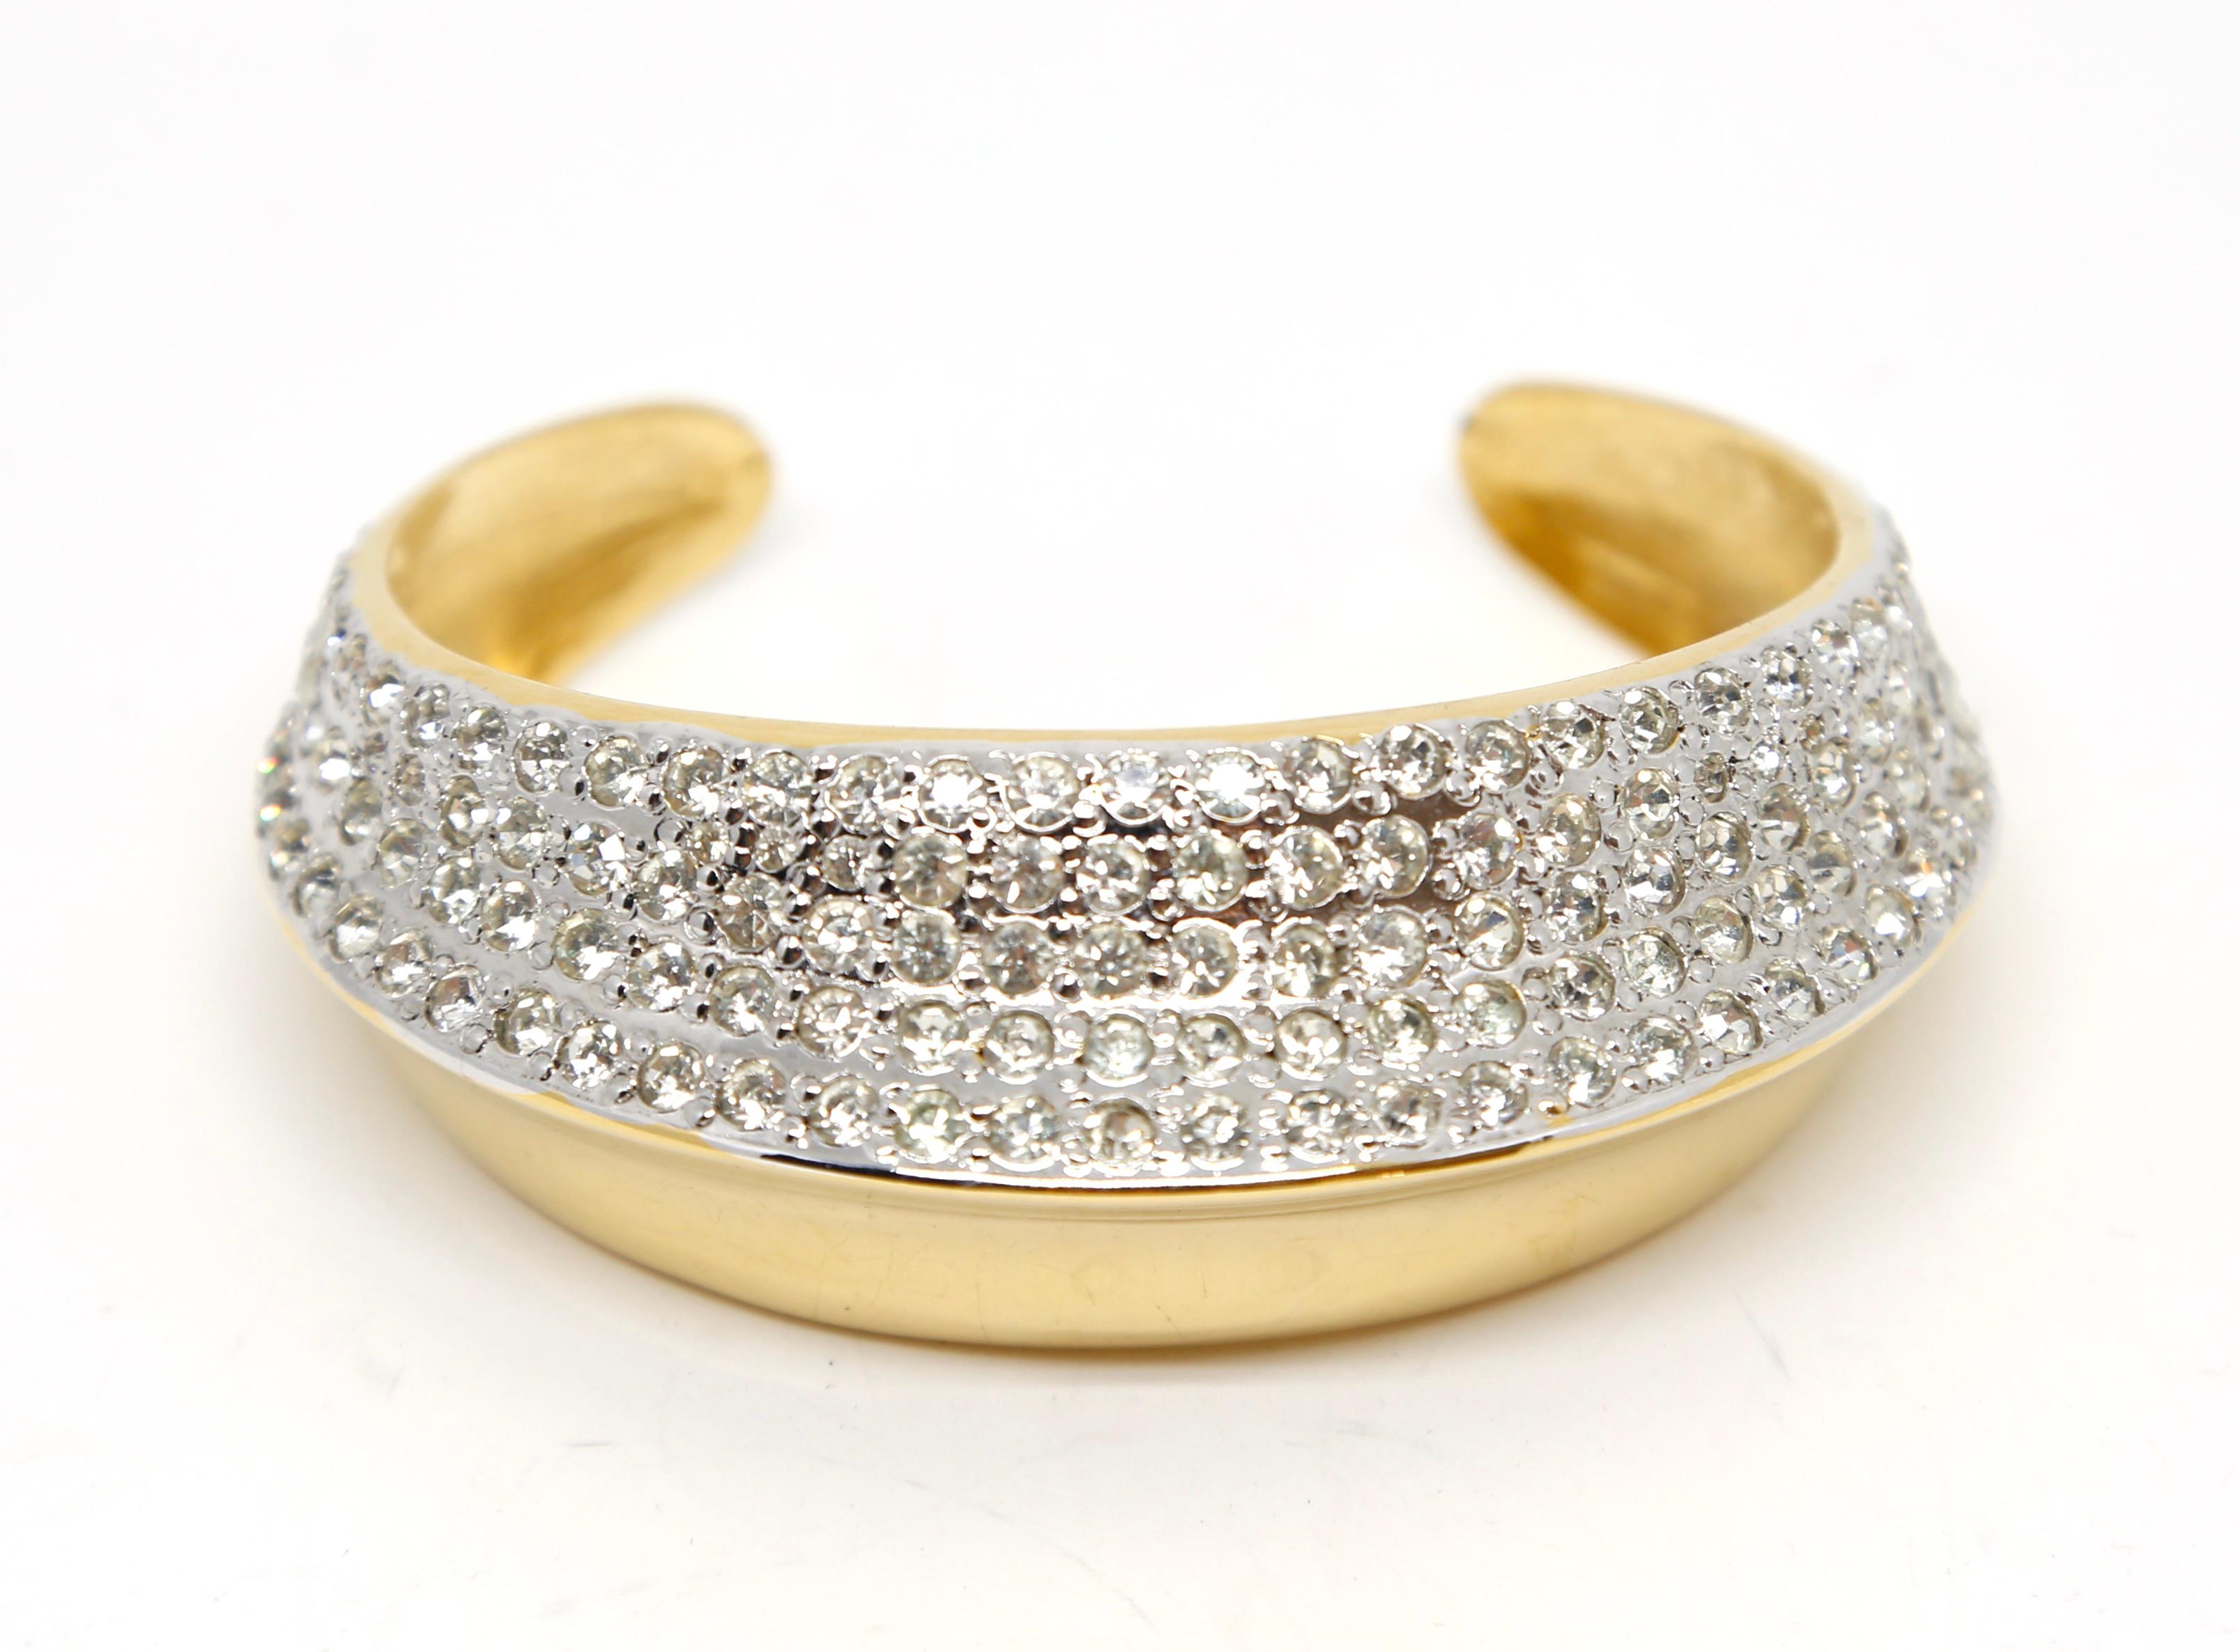 Vintage GOOSSENS for YVES SAINT LAURENT gilt bracelet with faceted crystals For Sale 2